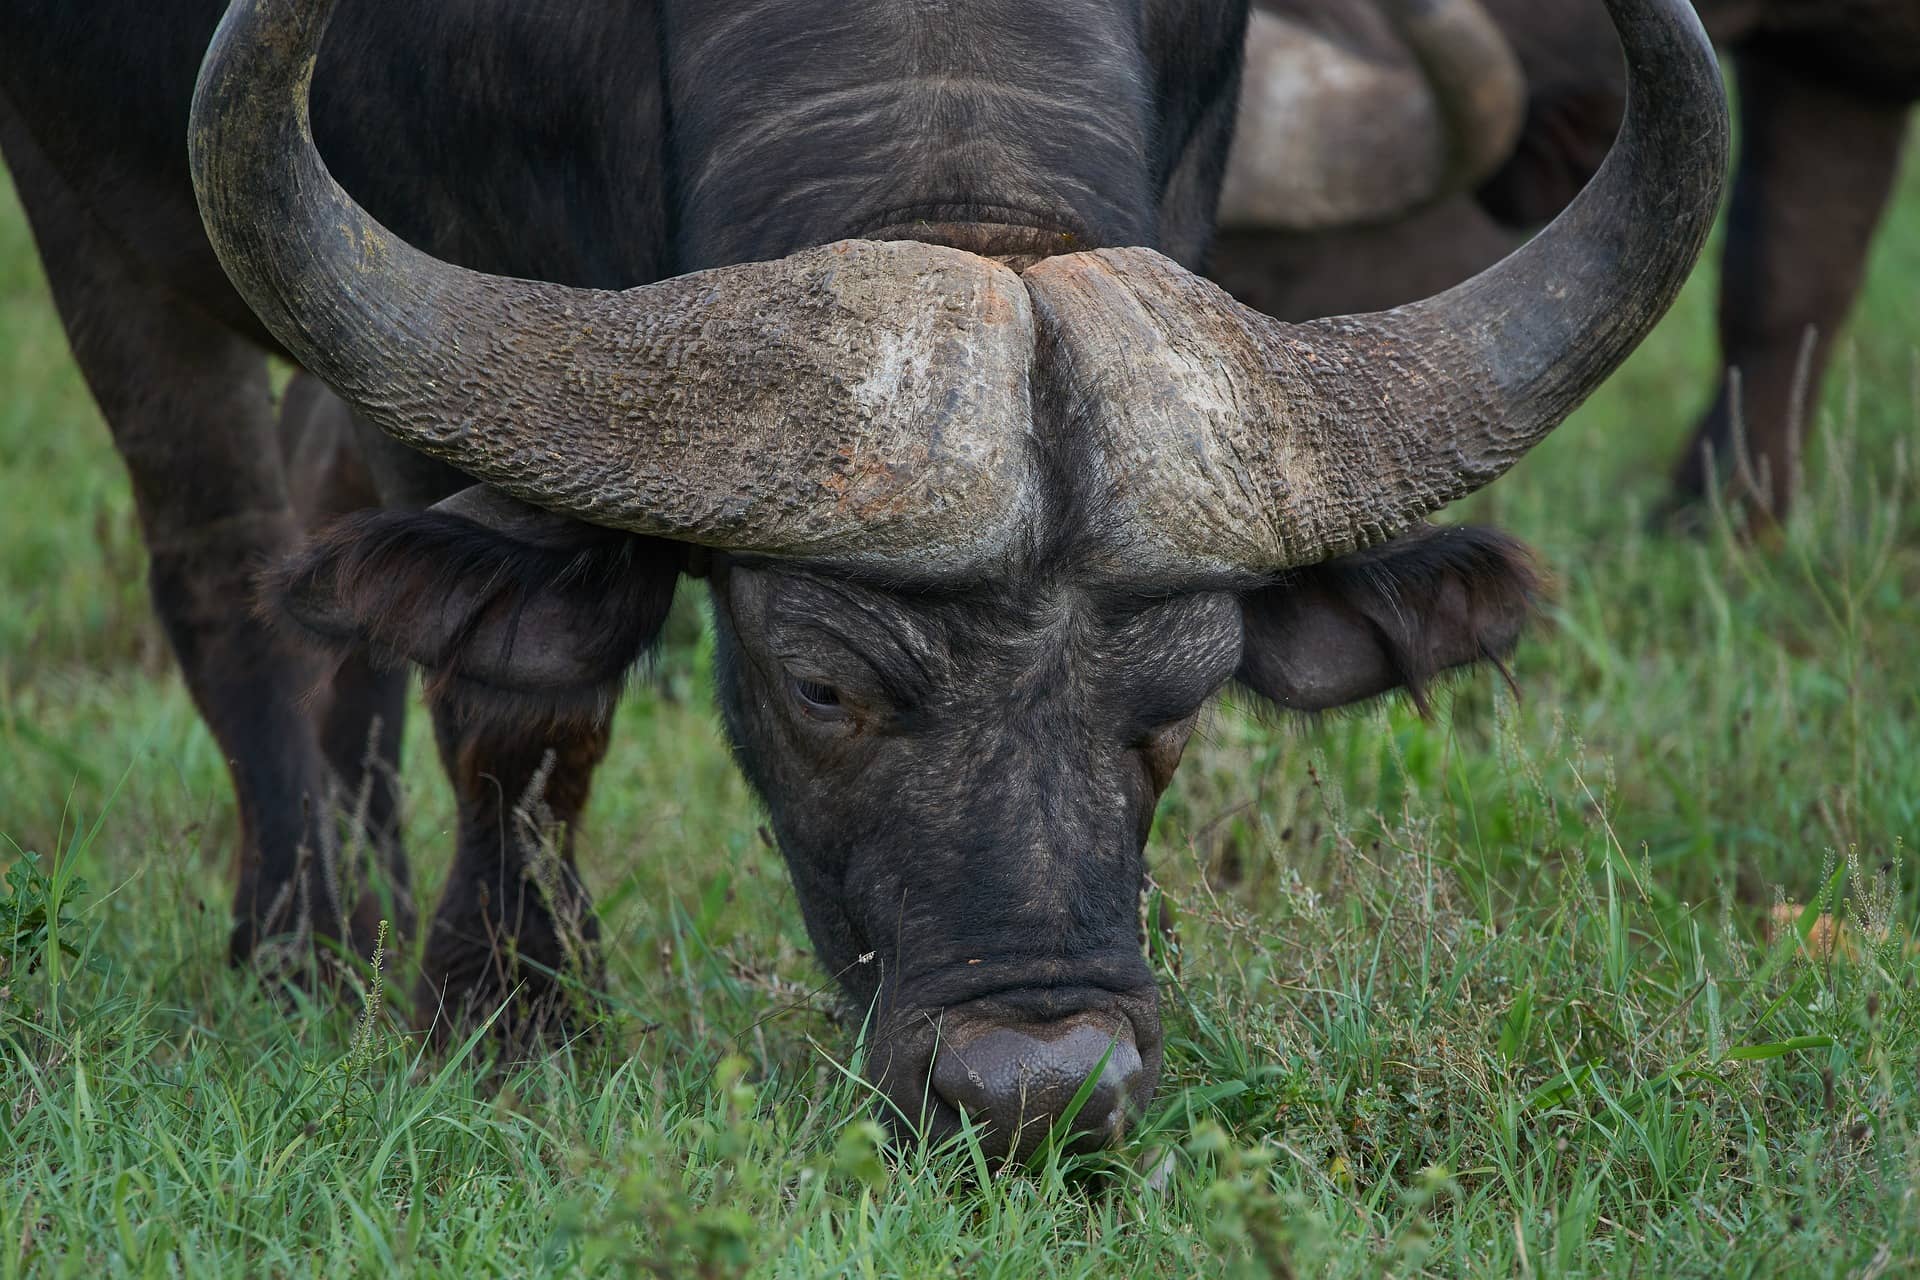 Water Buffalo - Description, Habitat, Image, Diet, and Interesting Facts